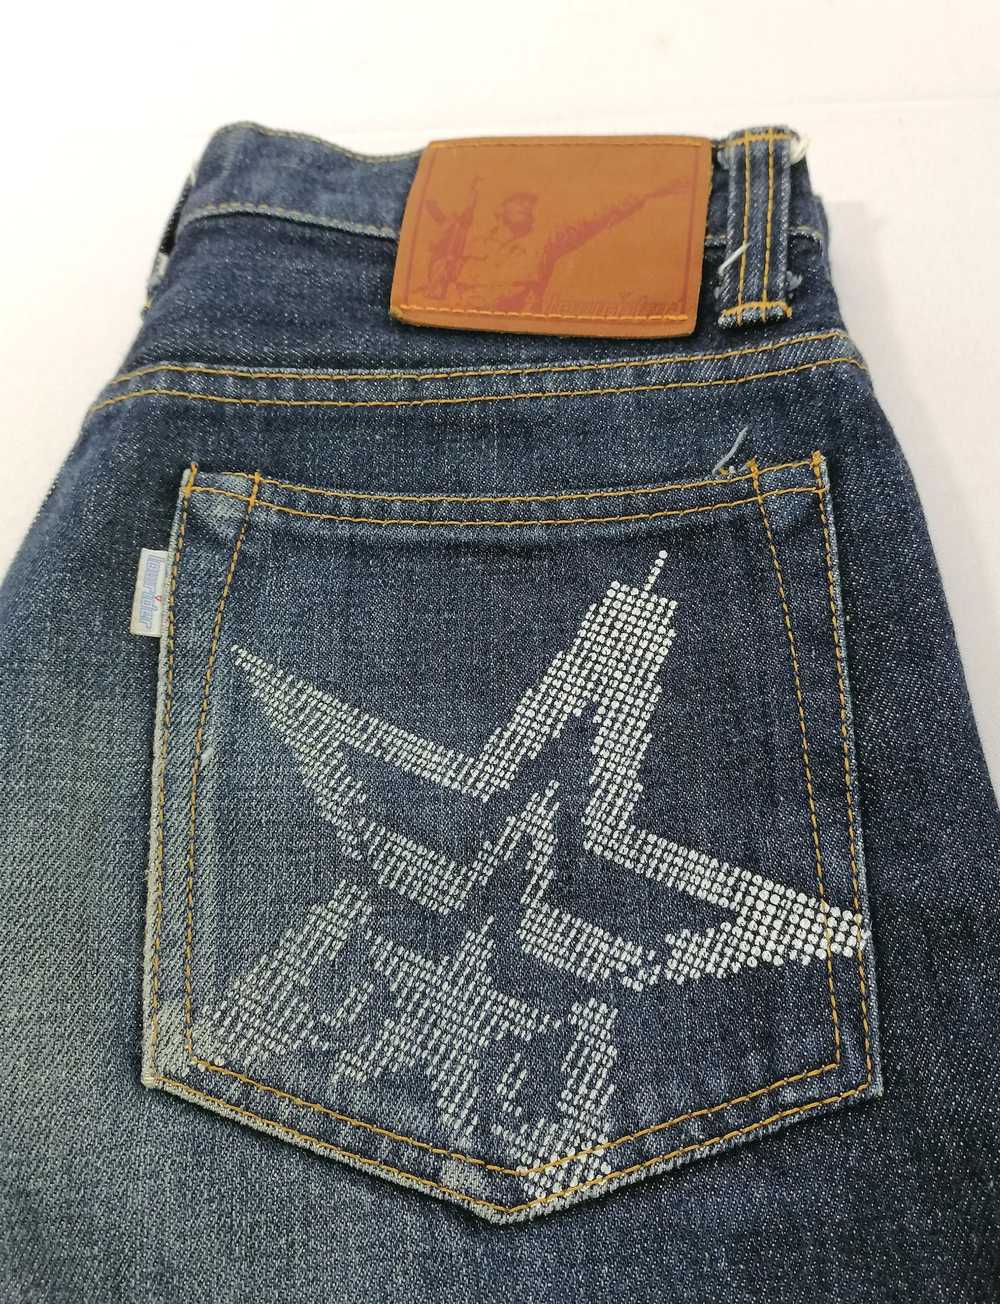 Japanese Brand Low Rider Selvedge Denim Jeans - image 9